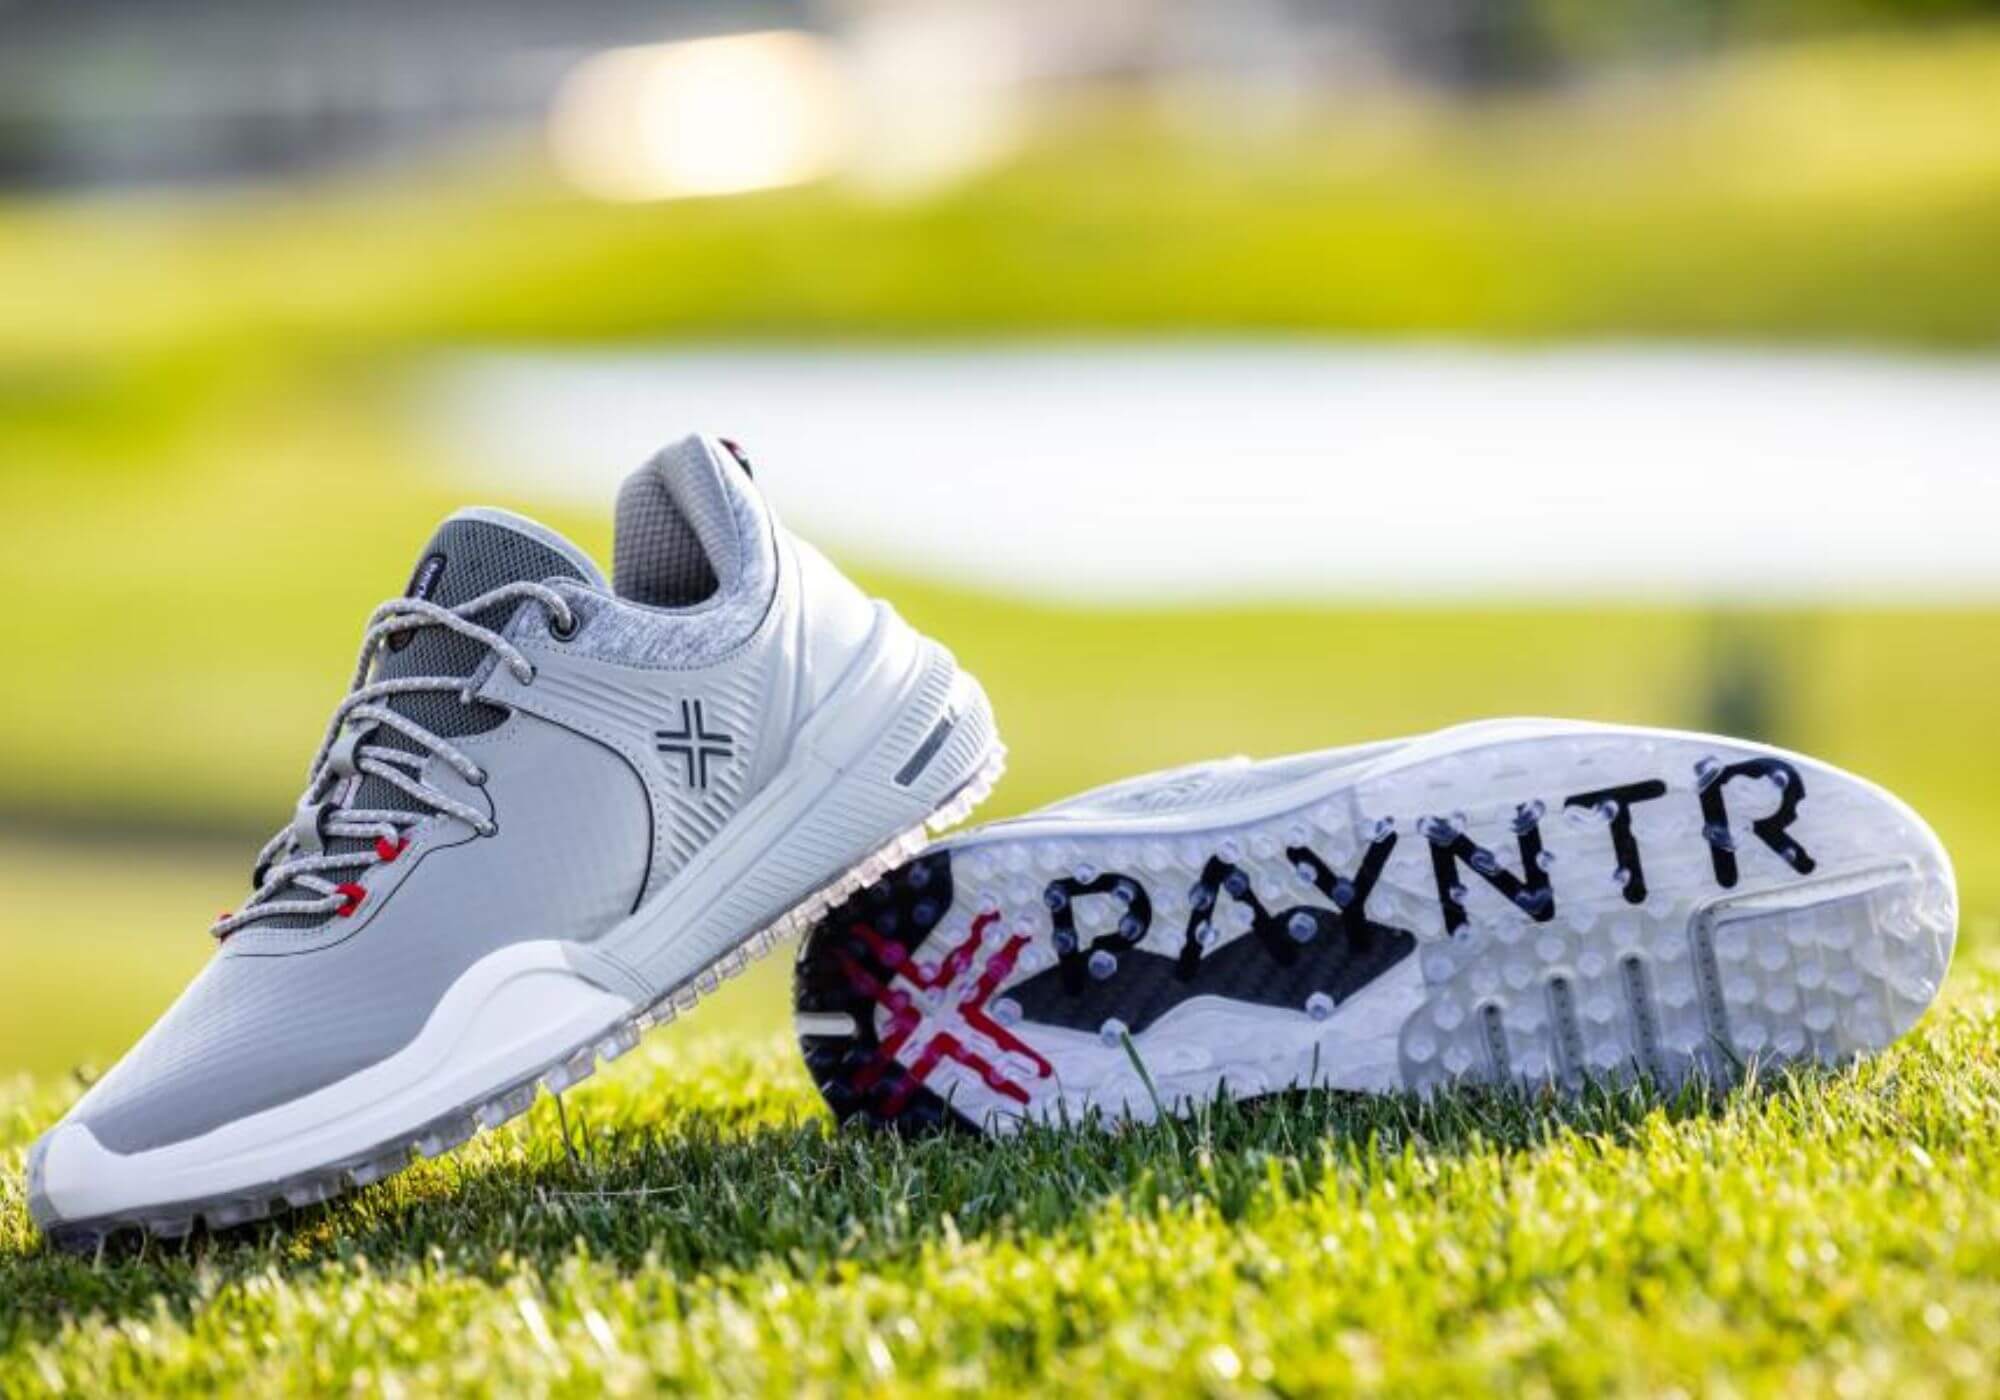 Payntr X 001 golf shoes